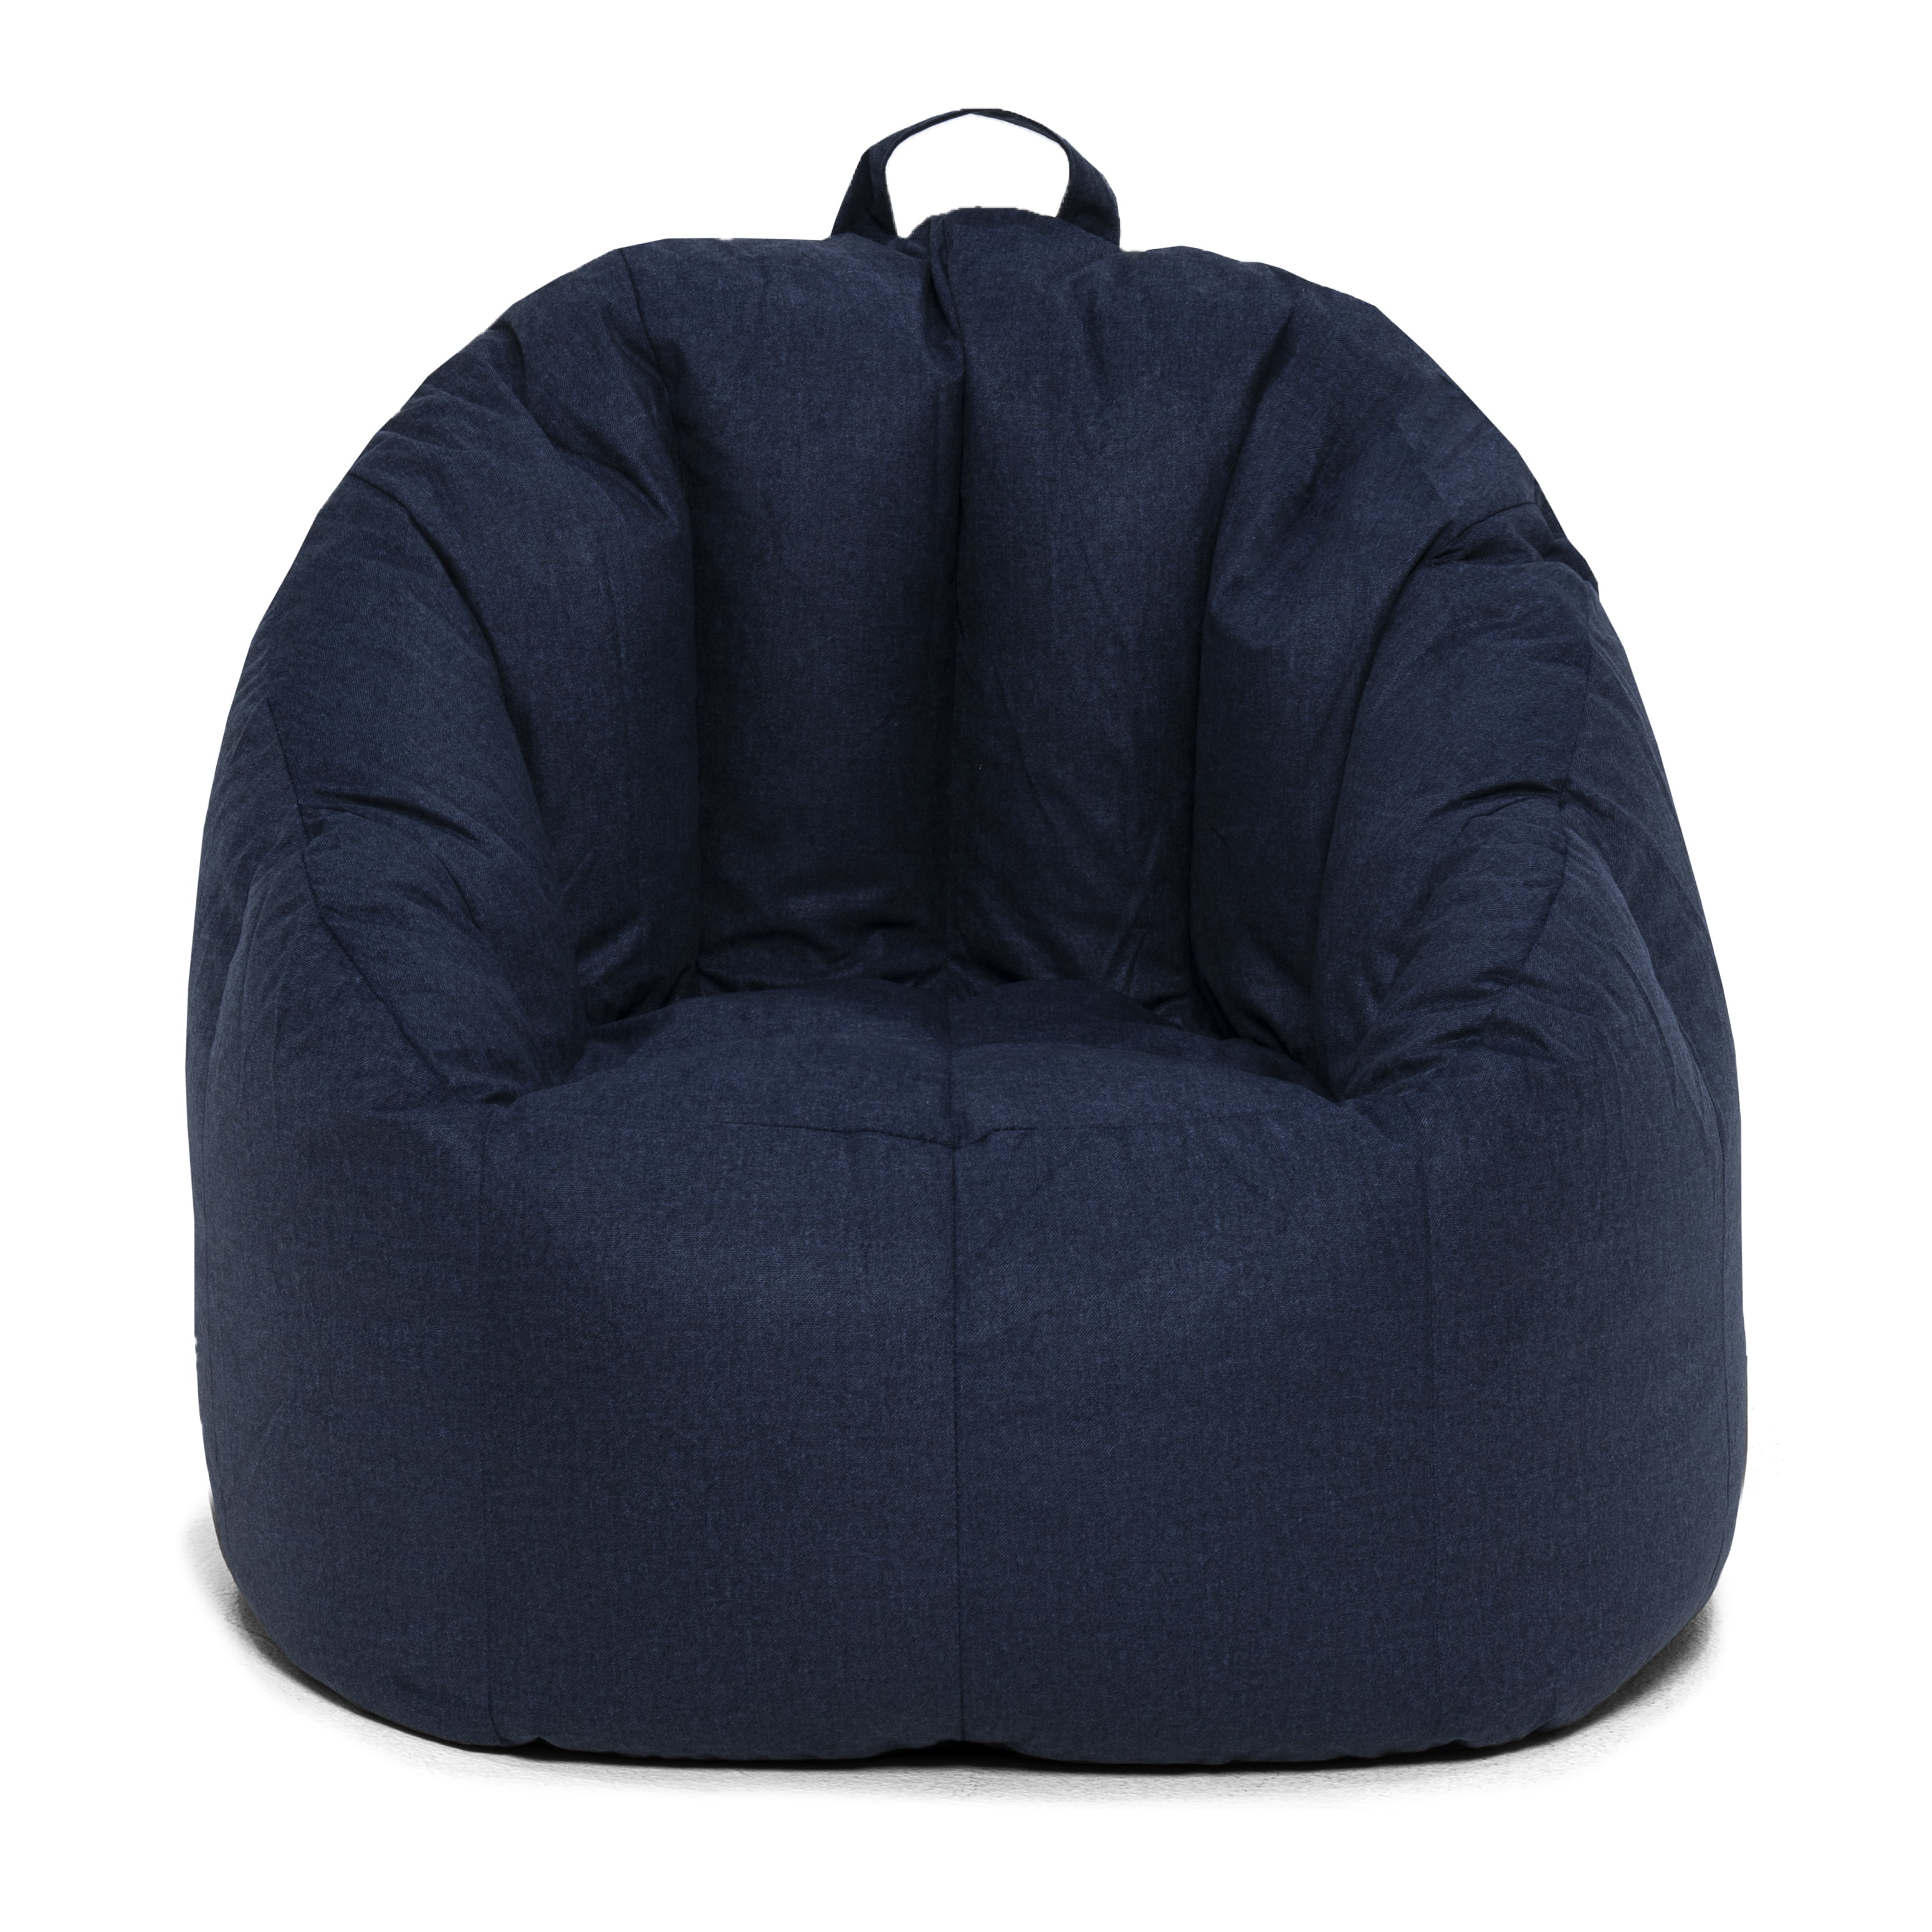 Big Joe Joey Bean Bag Chair Blue Denim, Big Joe Cuddle Bean Bag Chair Multiple Colors